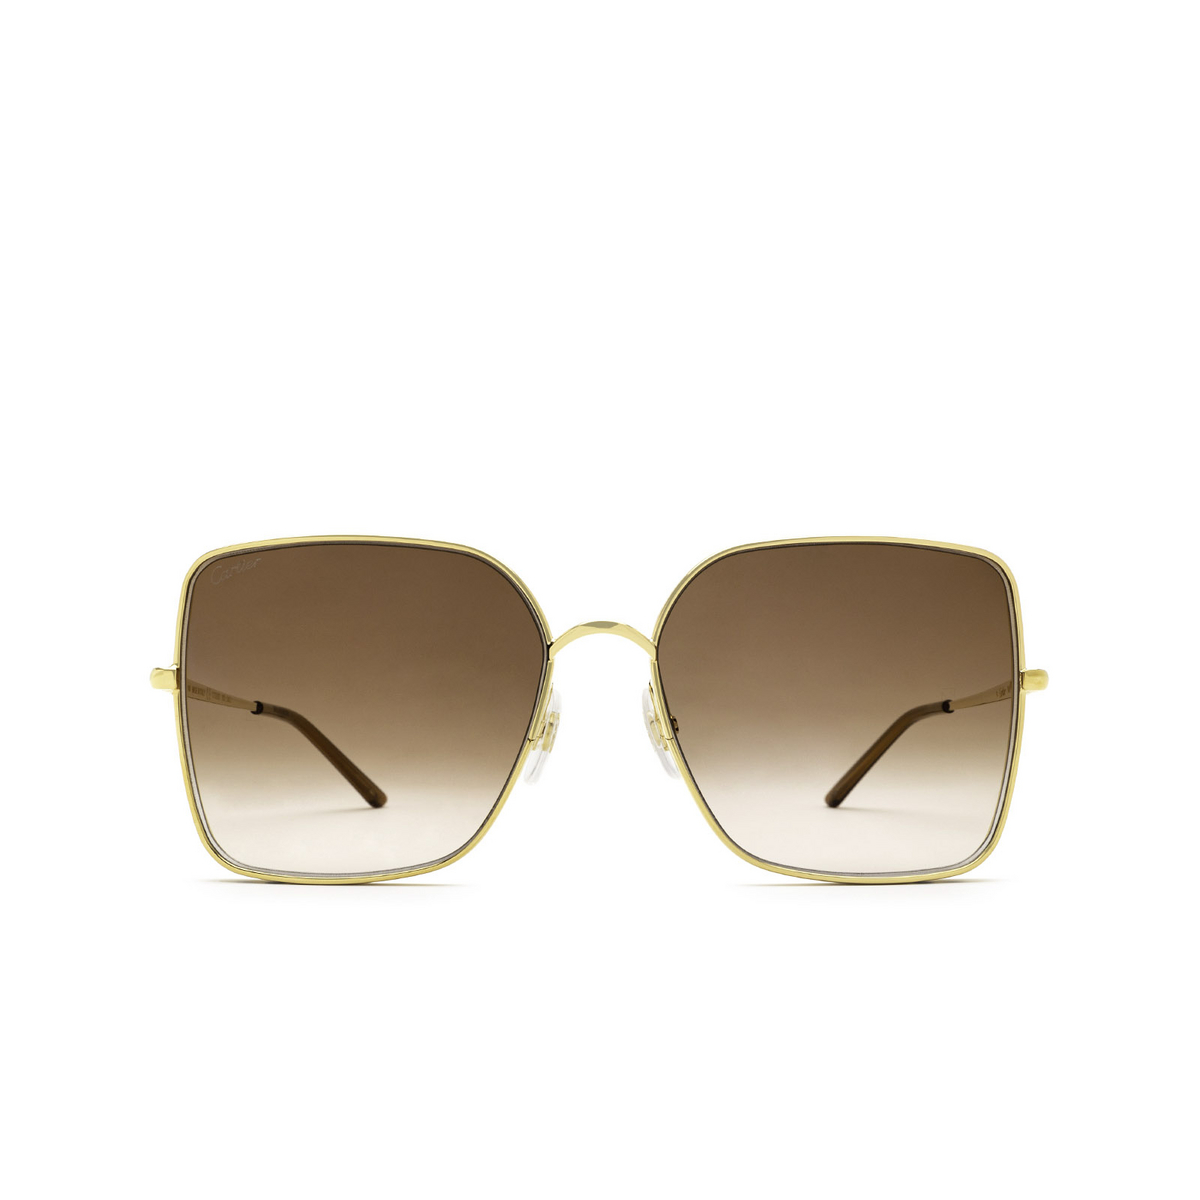 Cartier® Sunglasses: CT0299S color Gold 002 - front view.